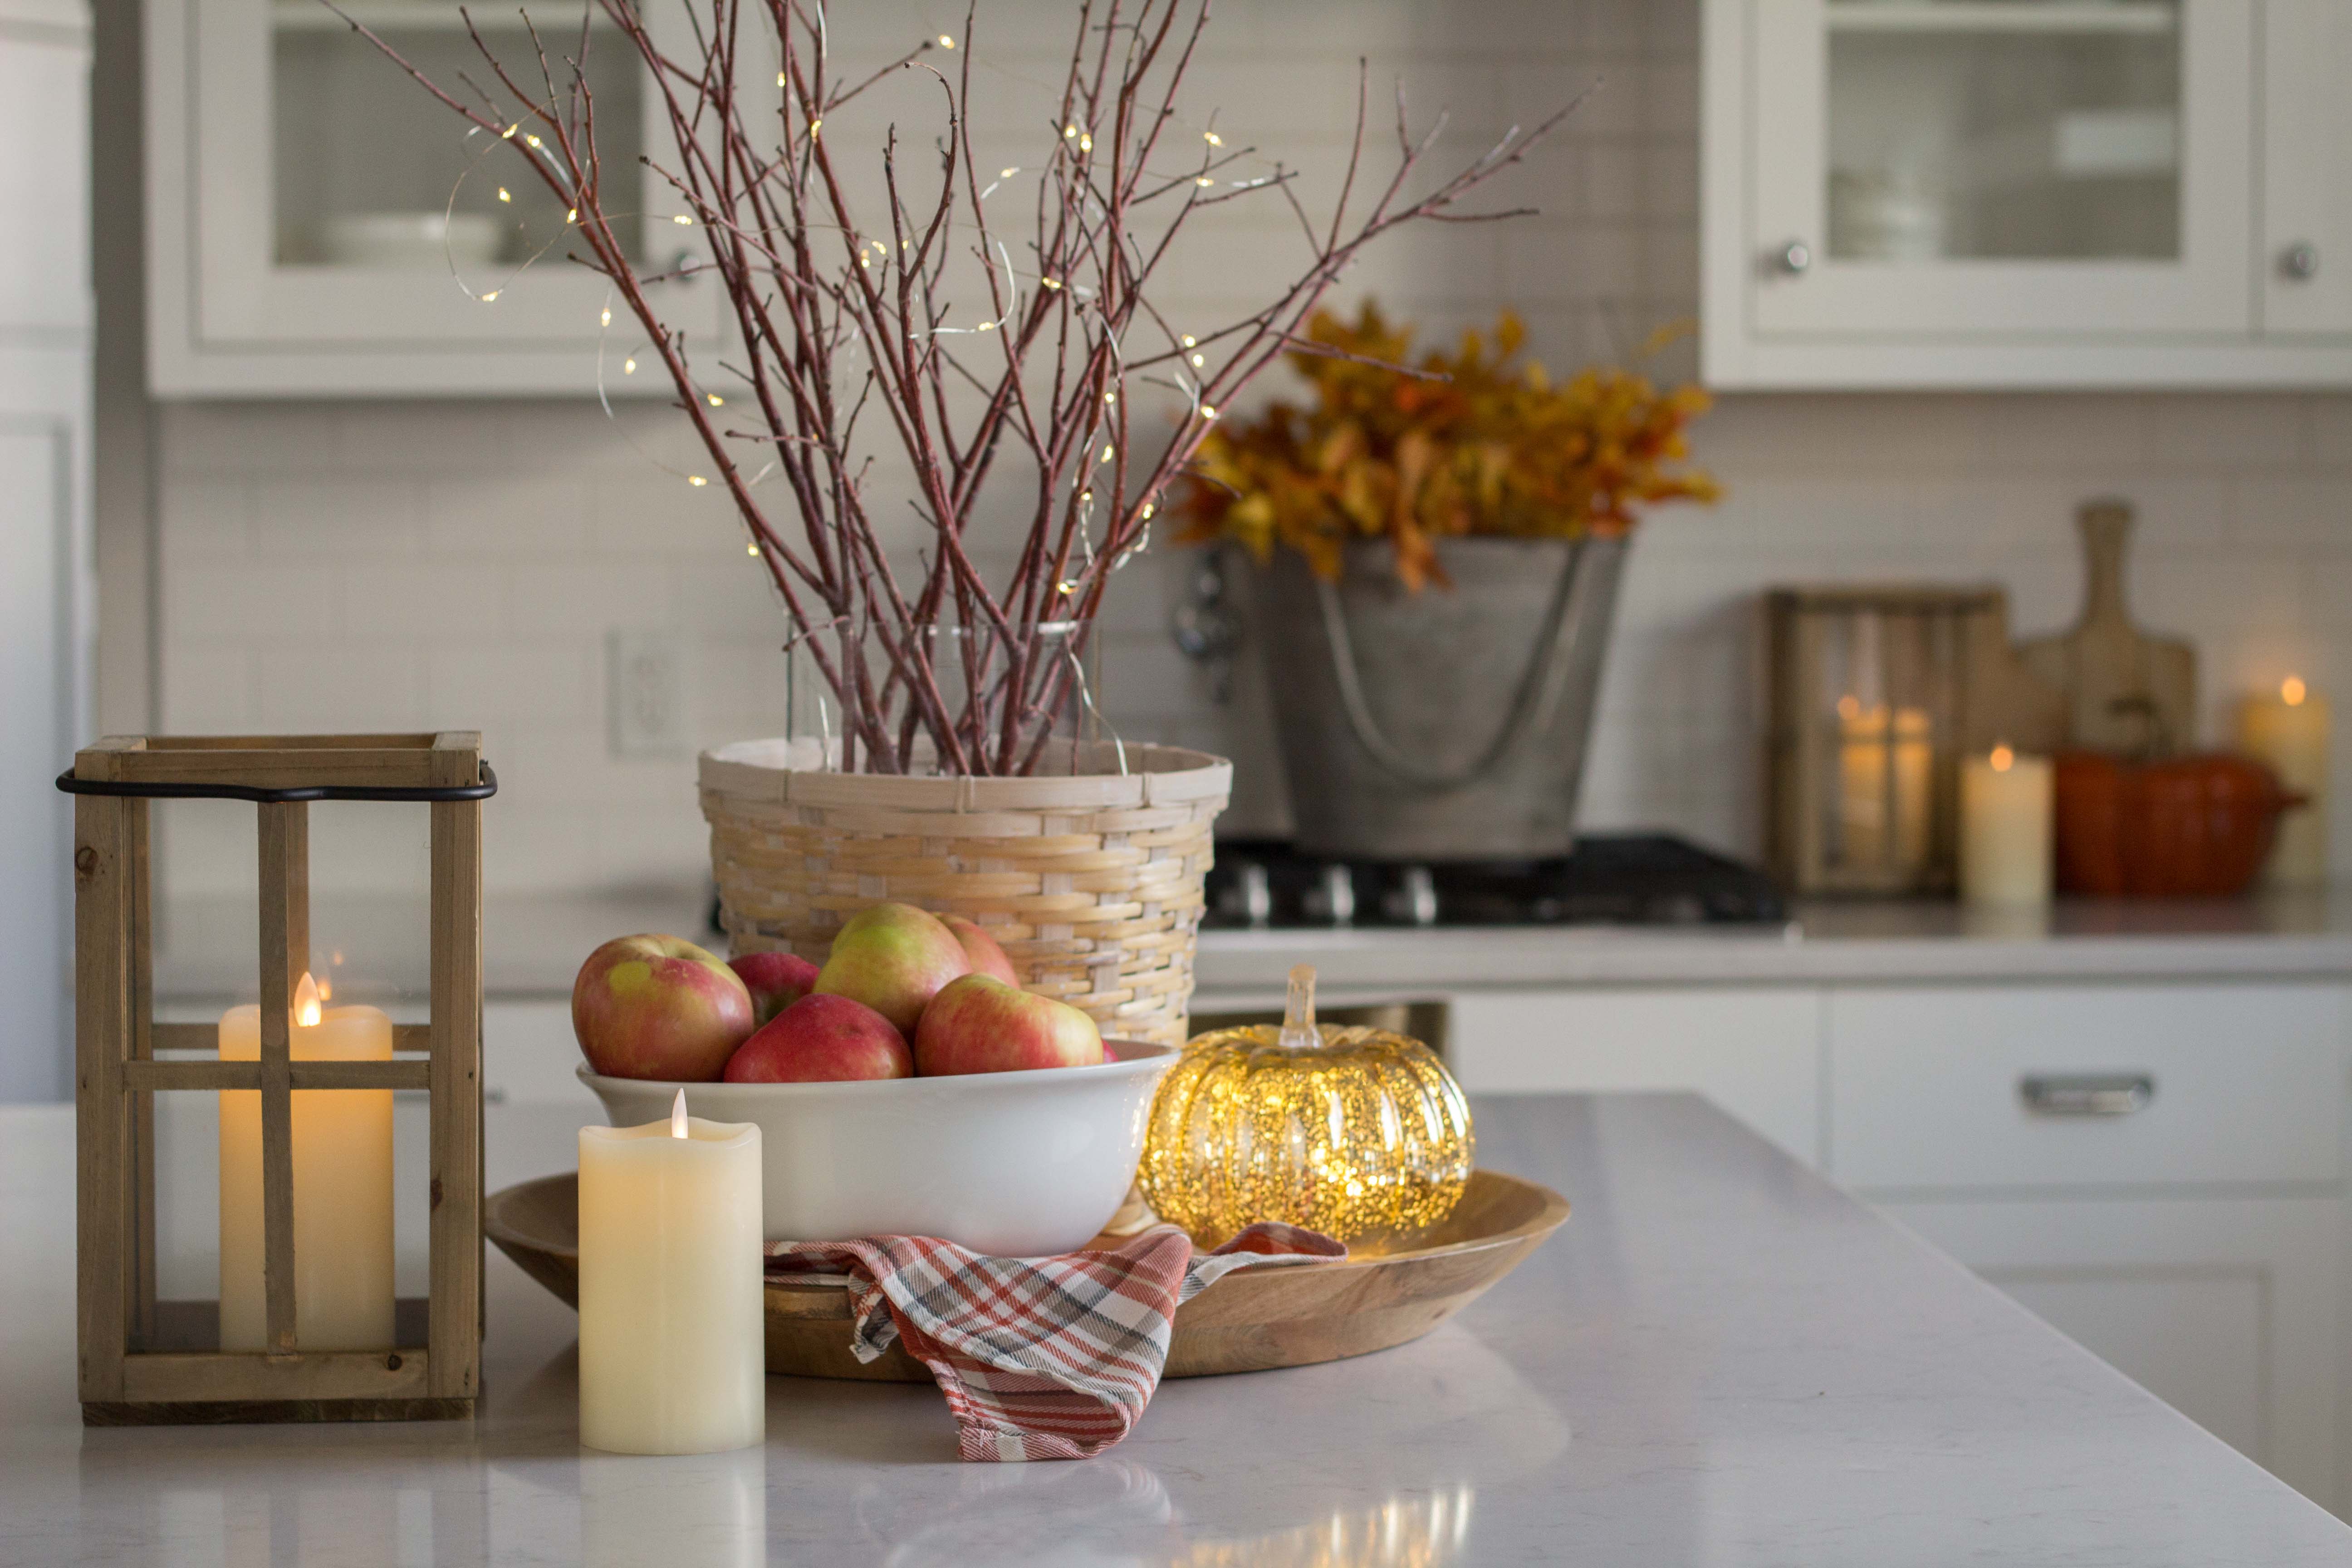 Cozy Autumn Candlelight Kitchen Décor